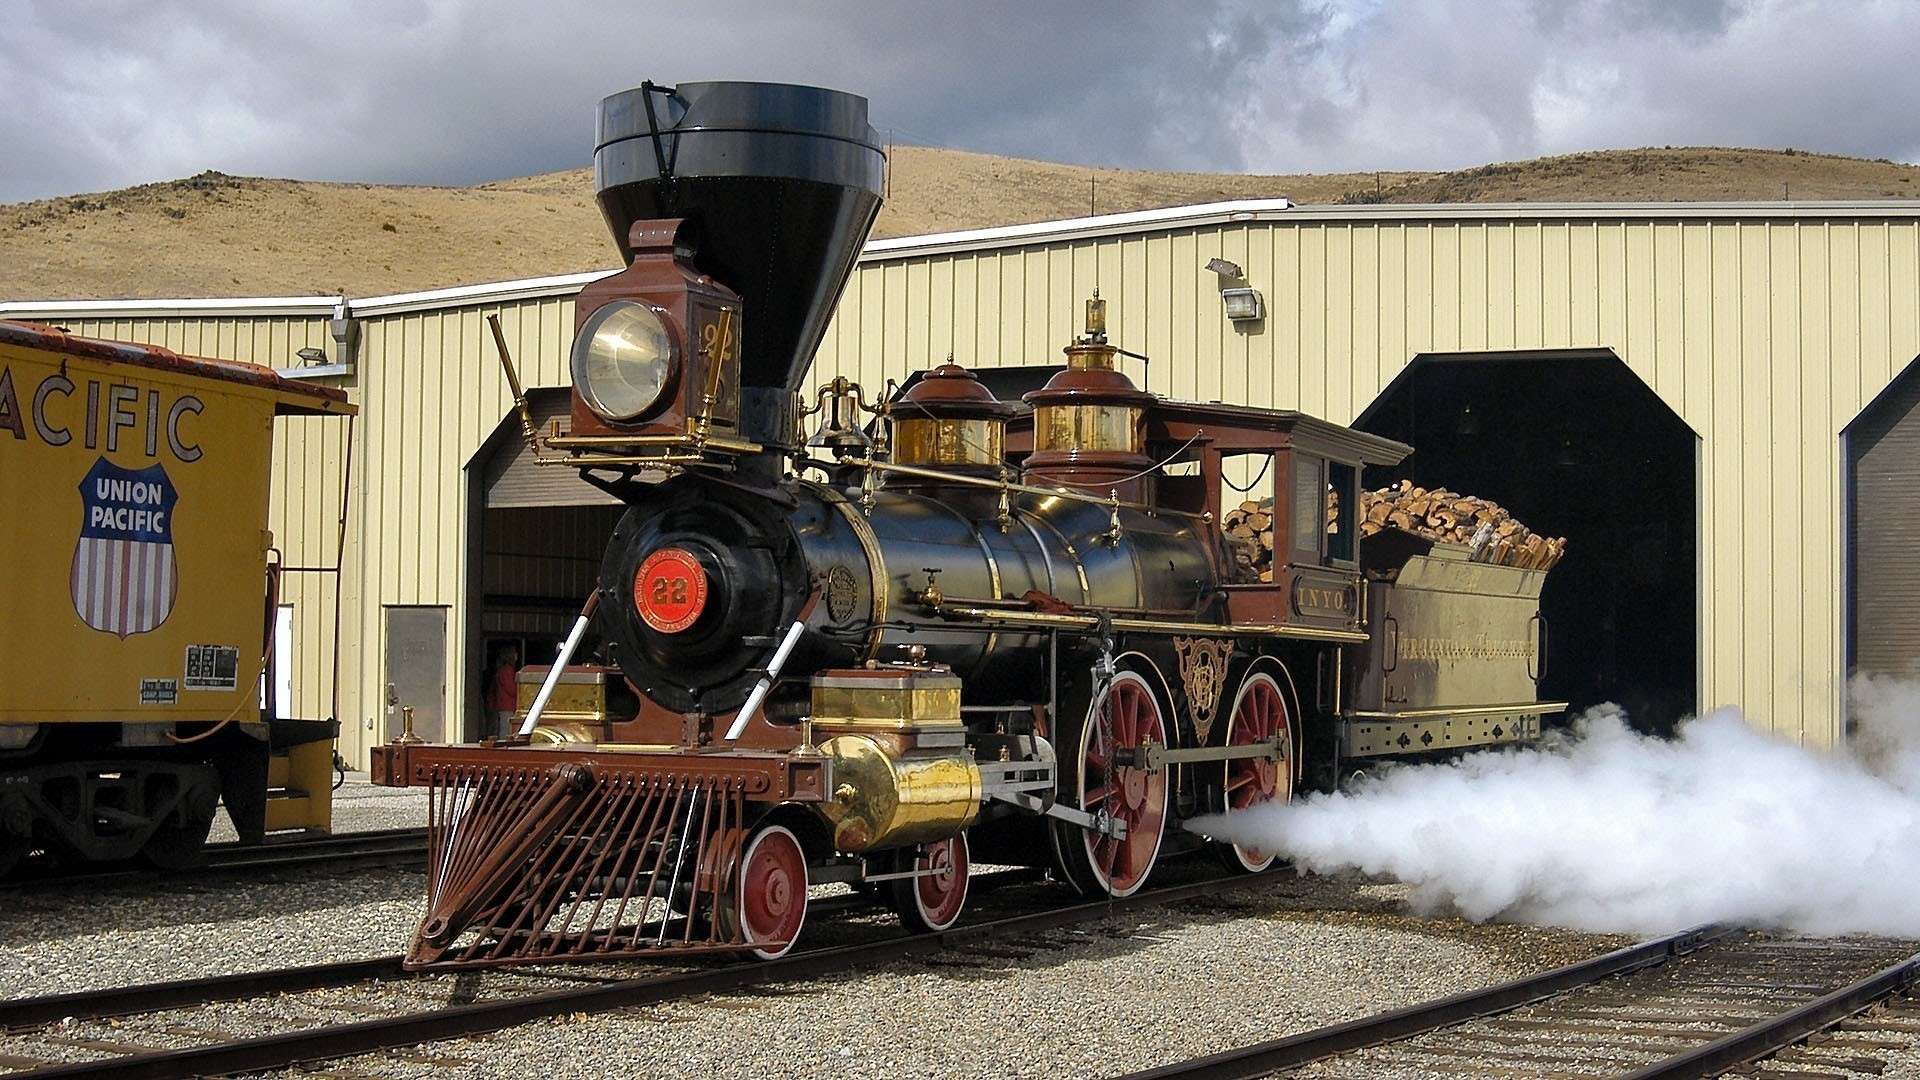 General 1920x1080 vintage steam locomotive vehicle railway locomotive